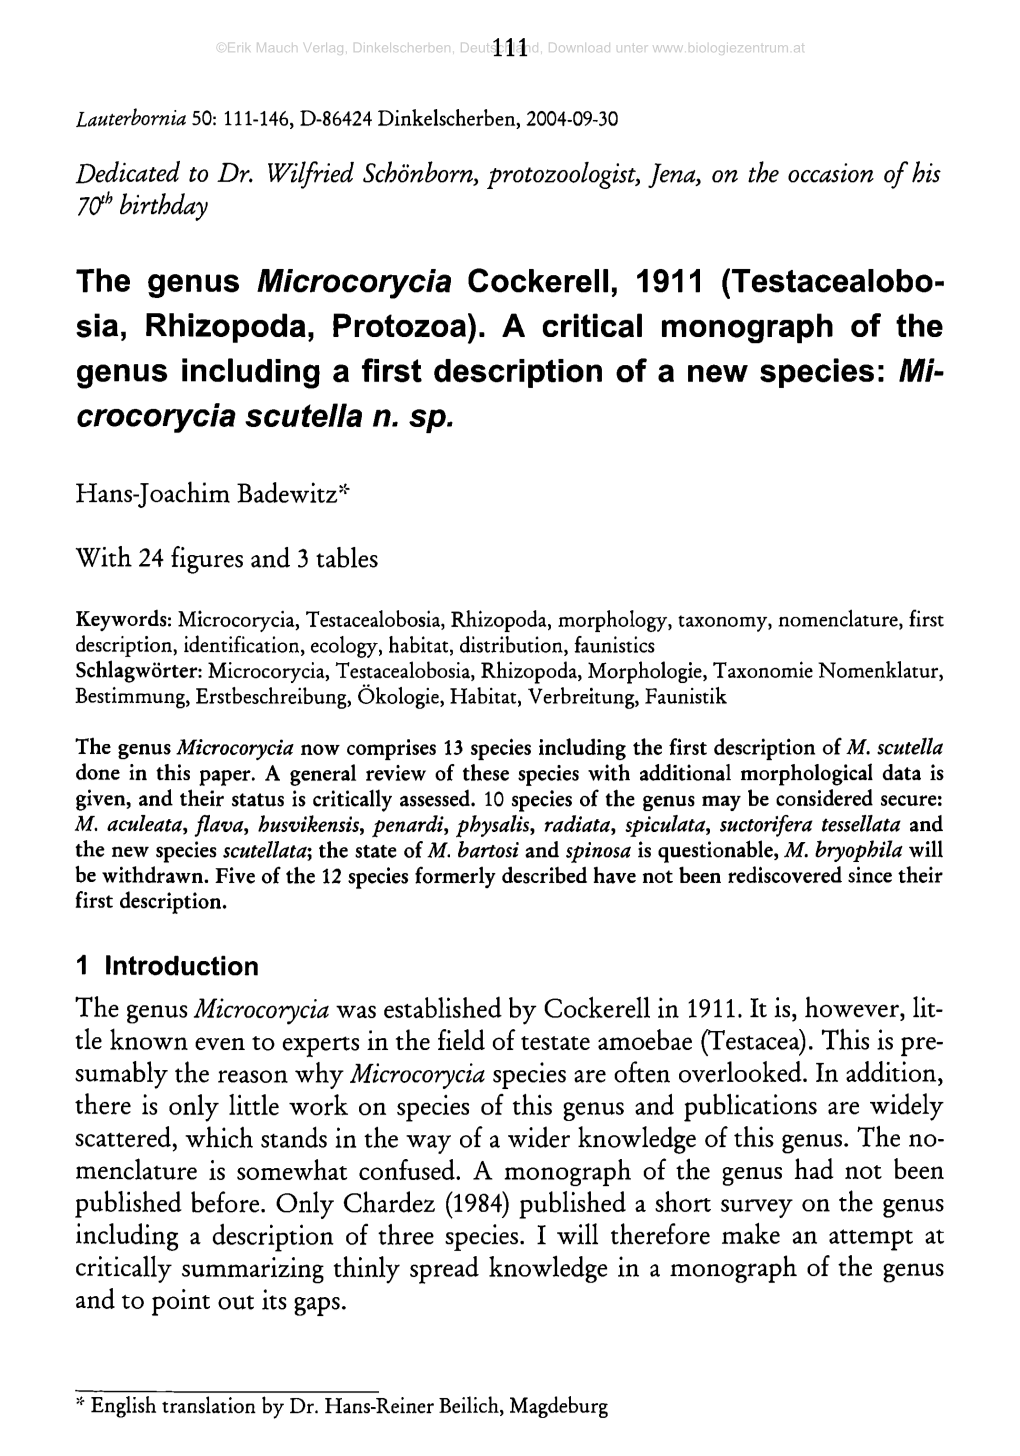 The Genus Microcorycia Cockerell, 1911 (Testacealobo- Sia, Rhizopoda, Protozoa)